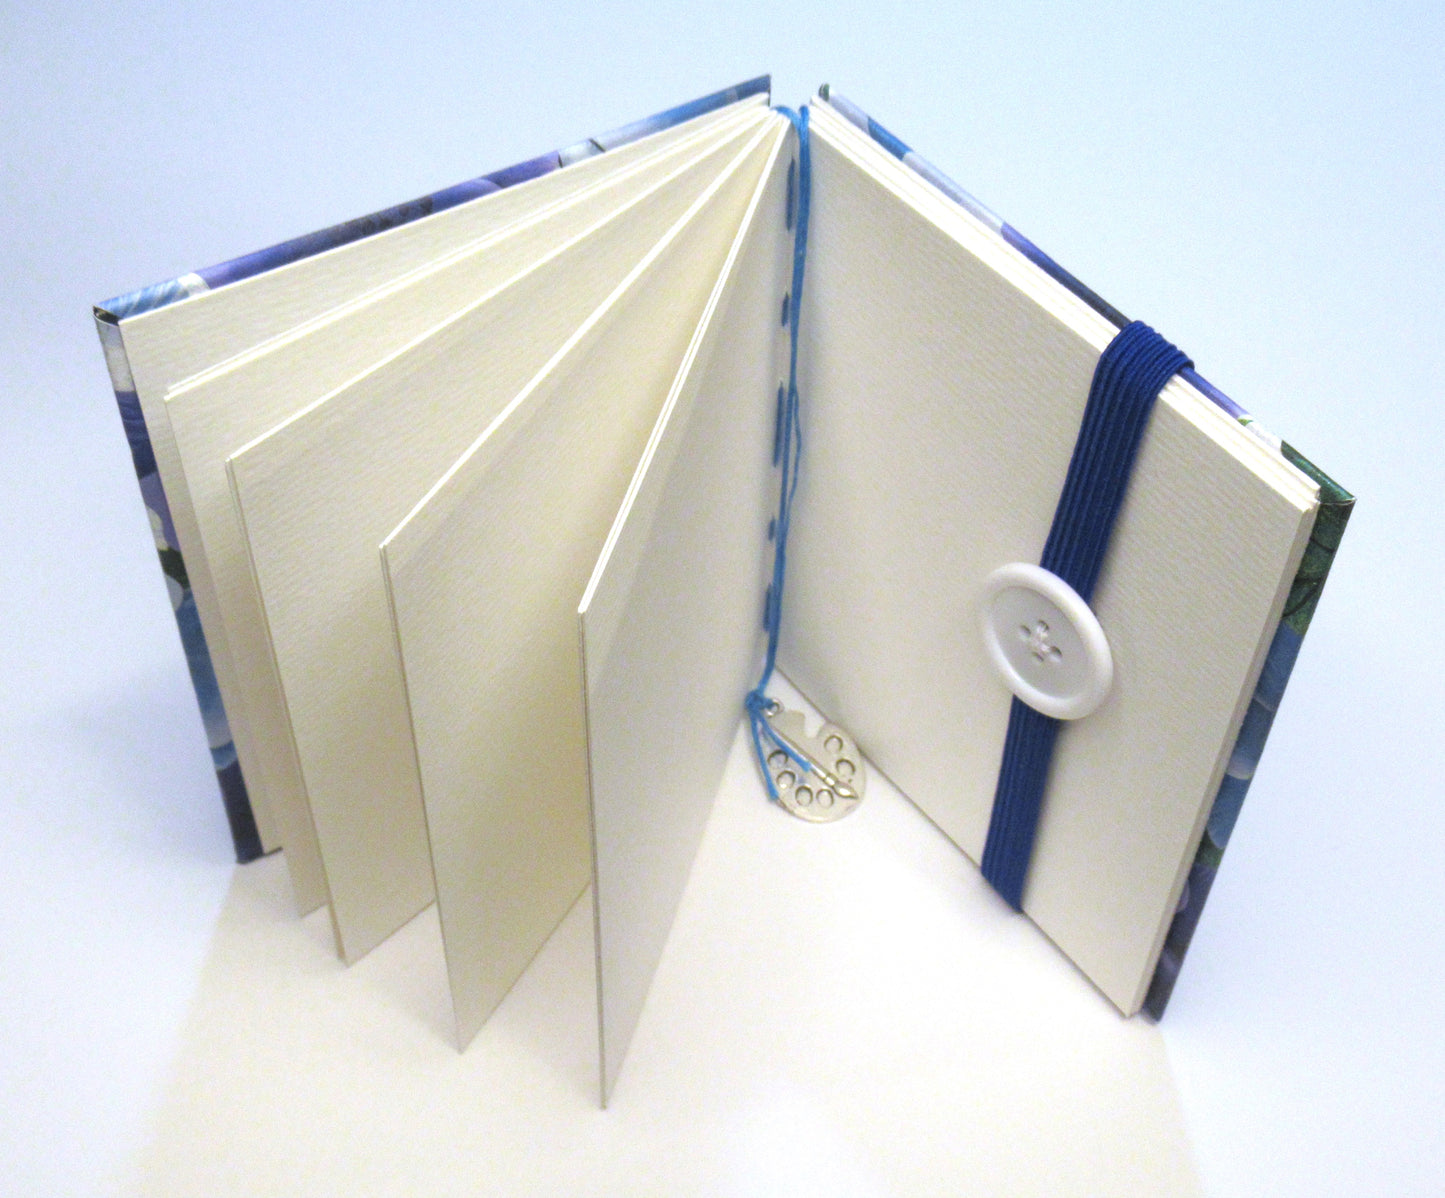 Sketchbook - Handmade Watercolour Sketchbook - Handbound Travel SKETCHBOOK - Hard Cover Art Journal - 140 lb Watercolour Paper - Stationery - Literacy Project - 504